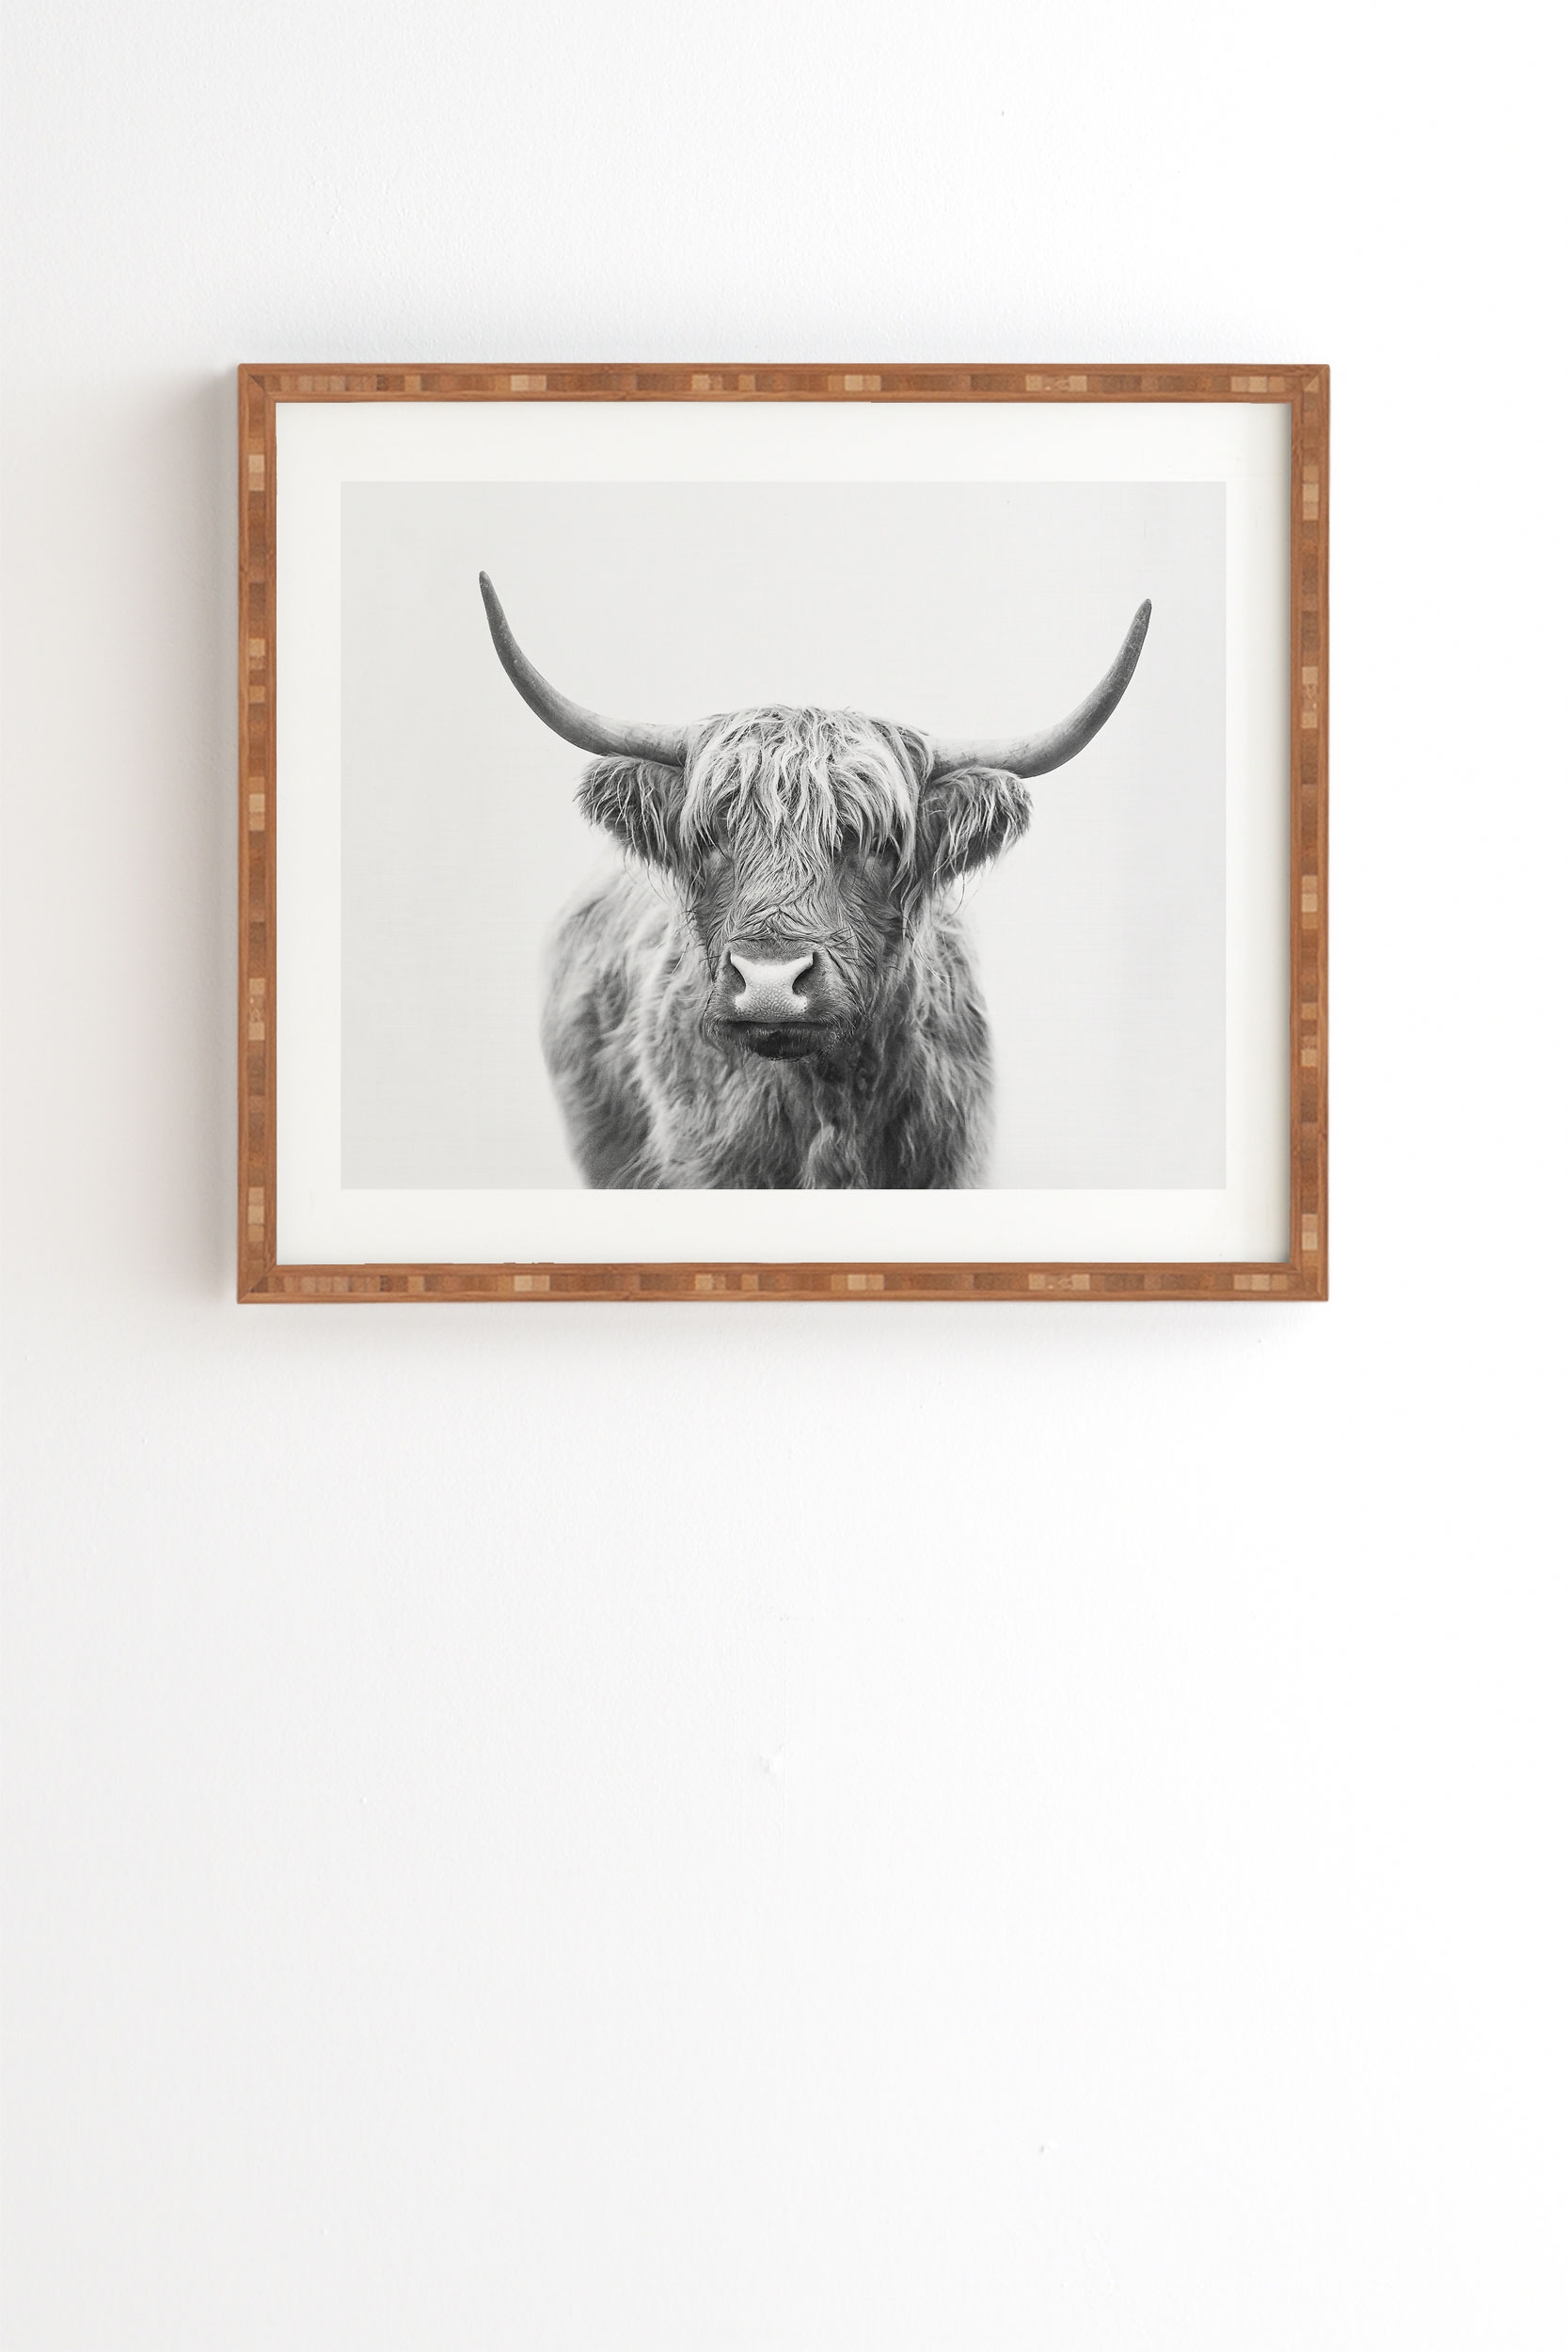 Highland Bull by Sisi and Seb - Framed Wall Art Bamboo 30" x 30" - Image 1